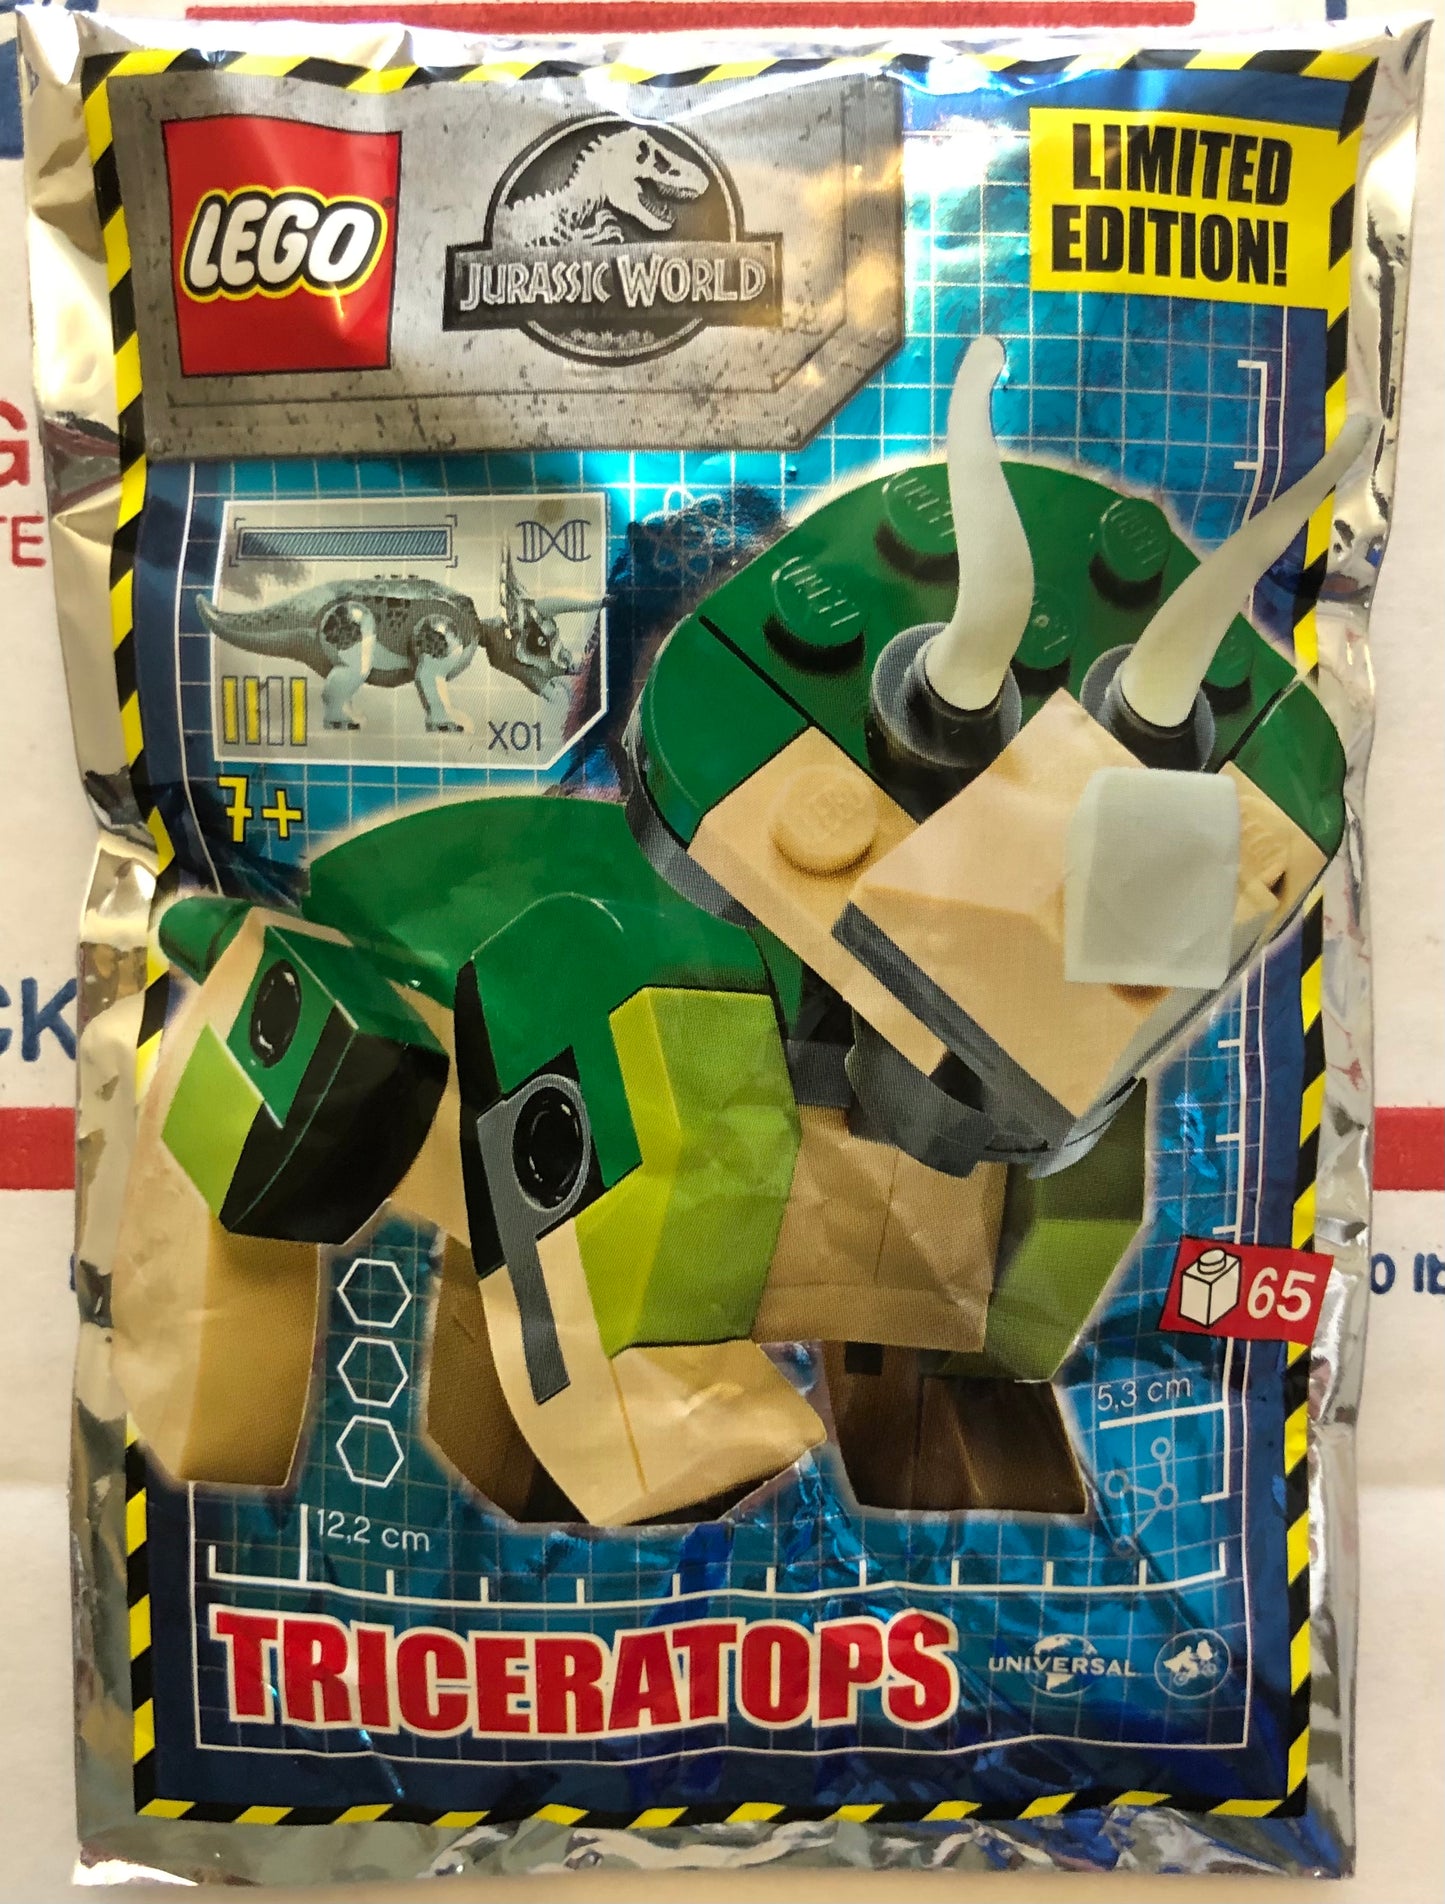 LEGO Jurassic World Triceratops Limited Edition Foil Pack Bag Build Set 122006